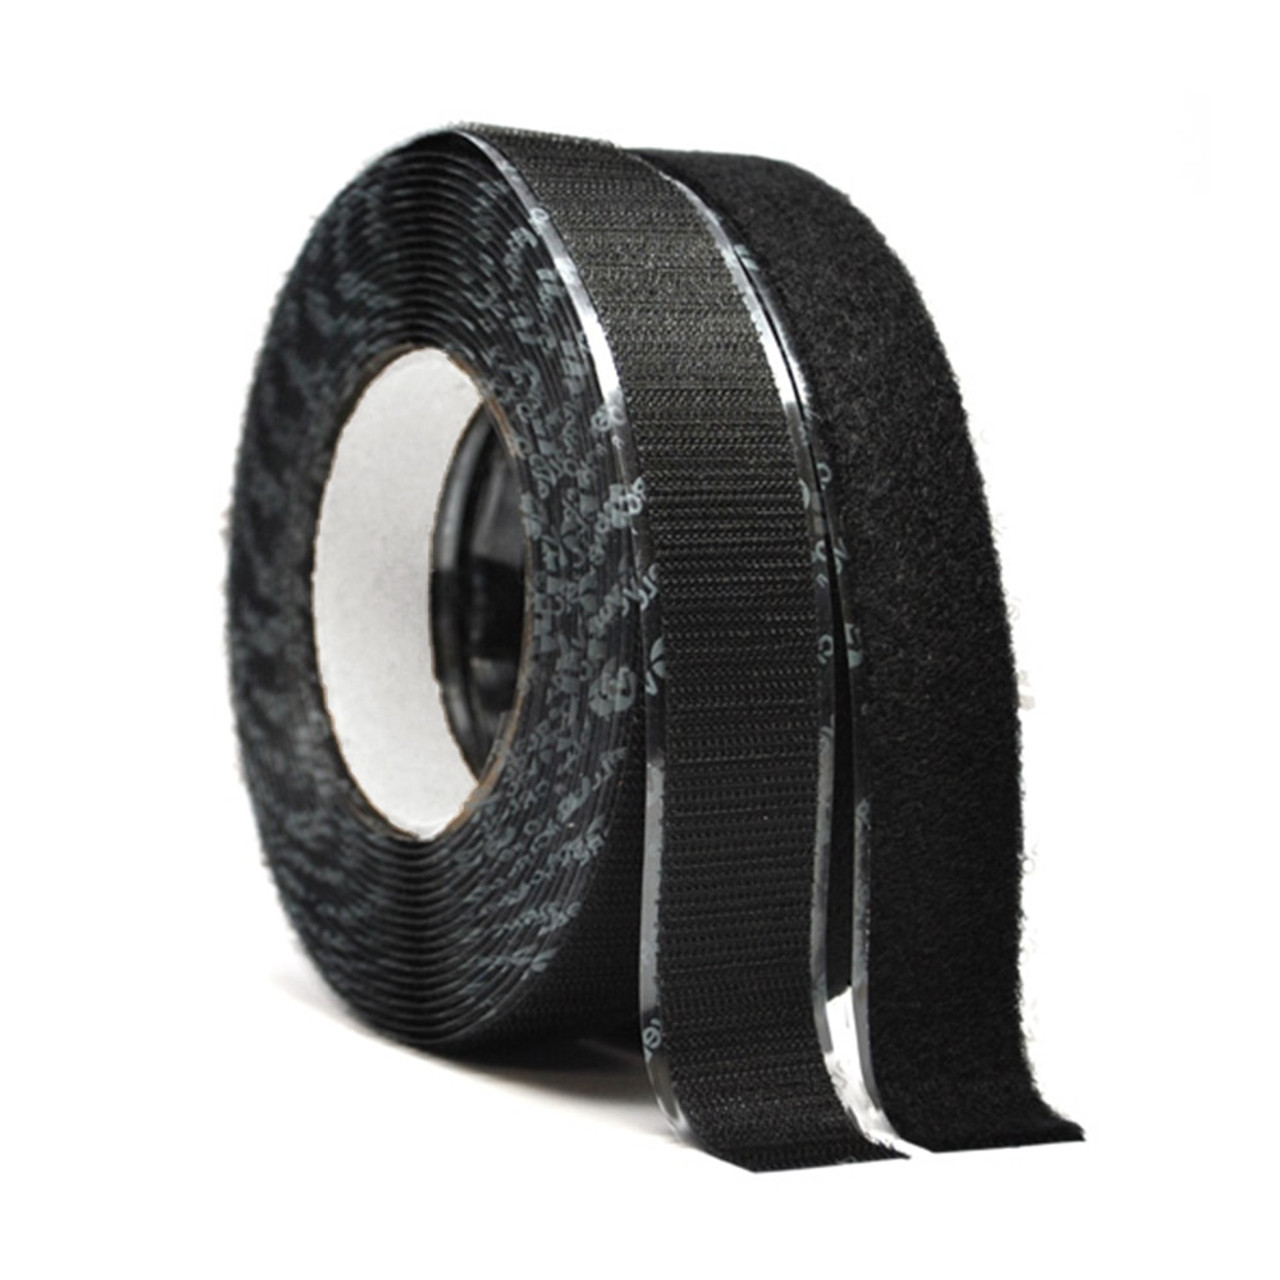 Velcro Brand - 1/2 inch White Loop: Pressure Sensitive Adhesive - Acrylic